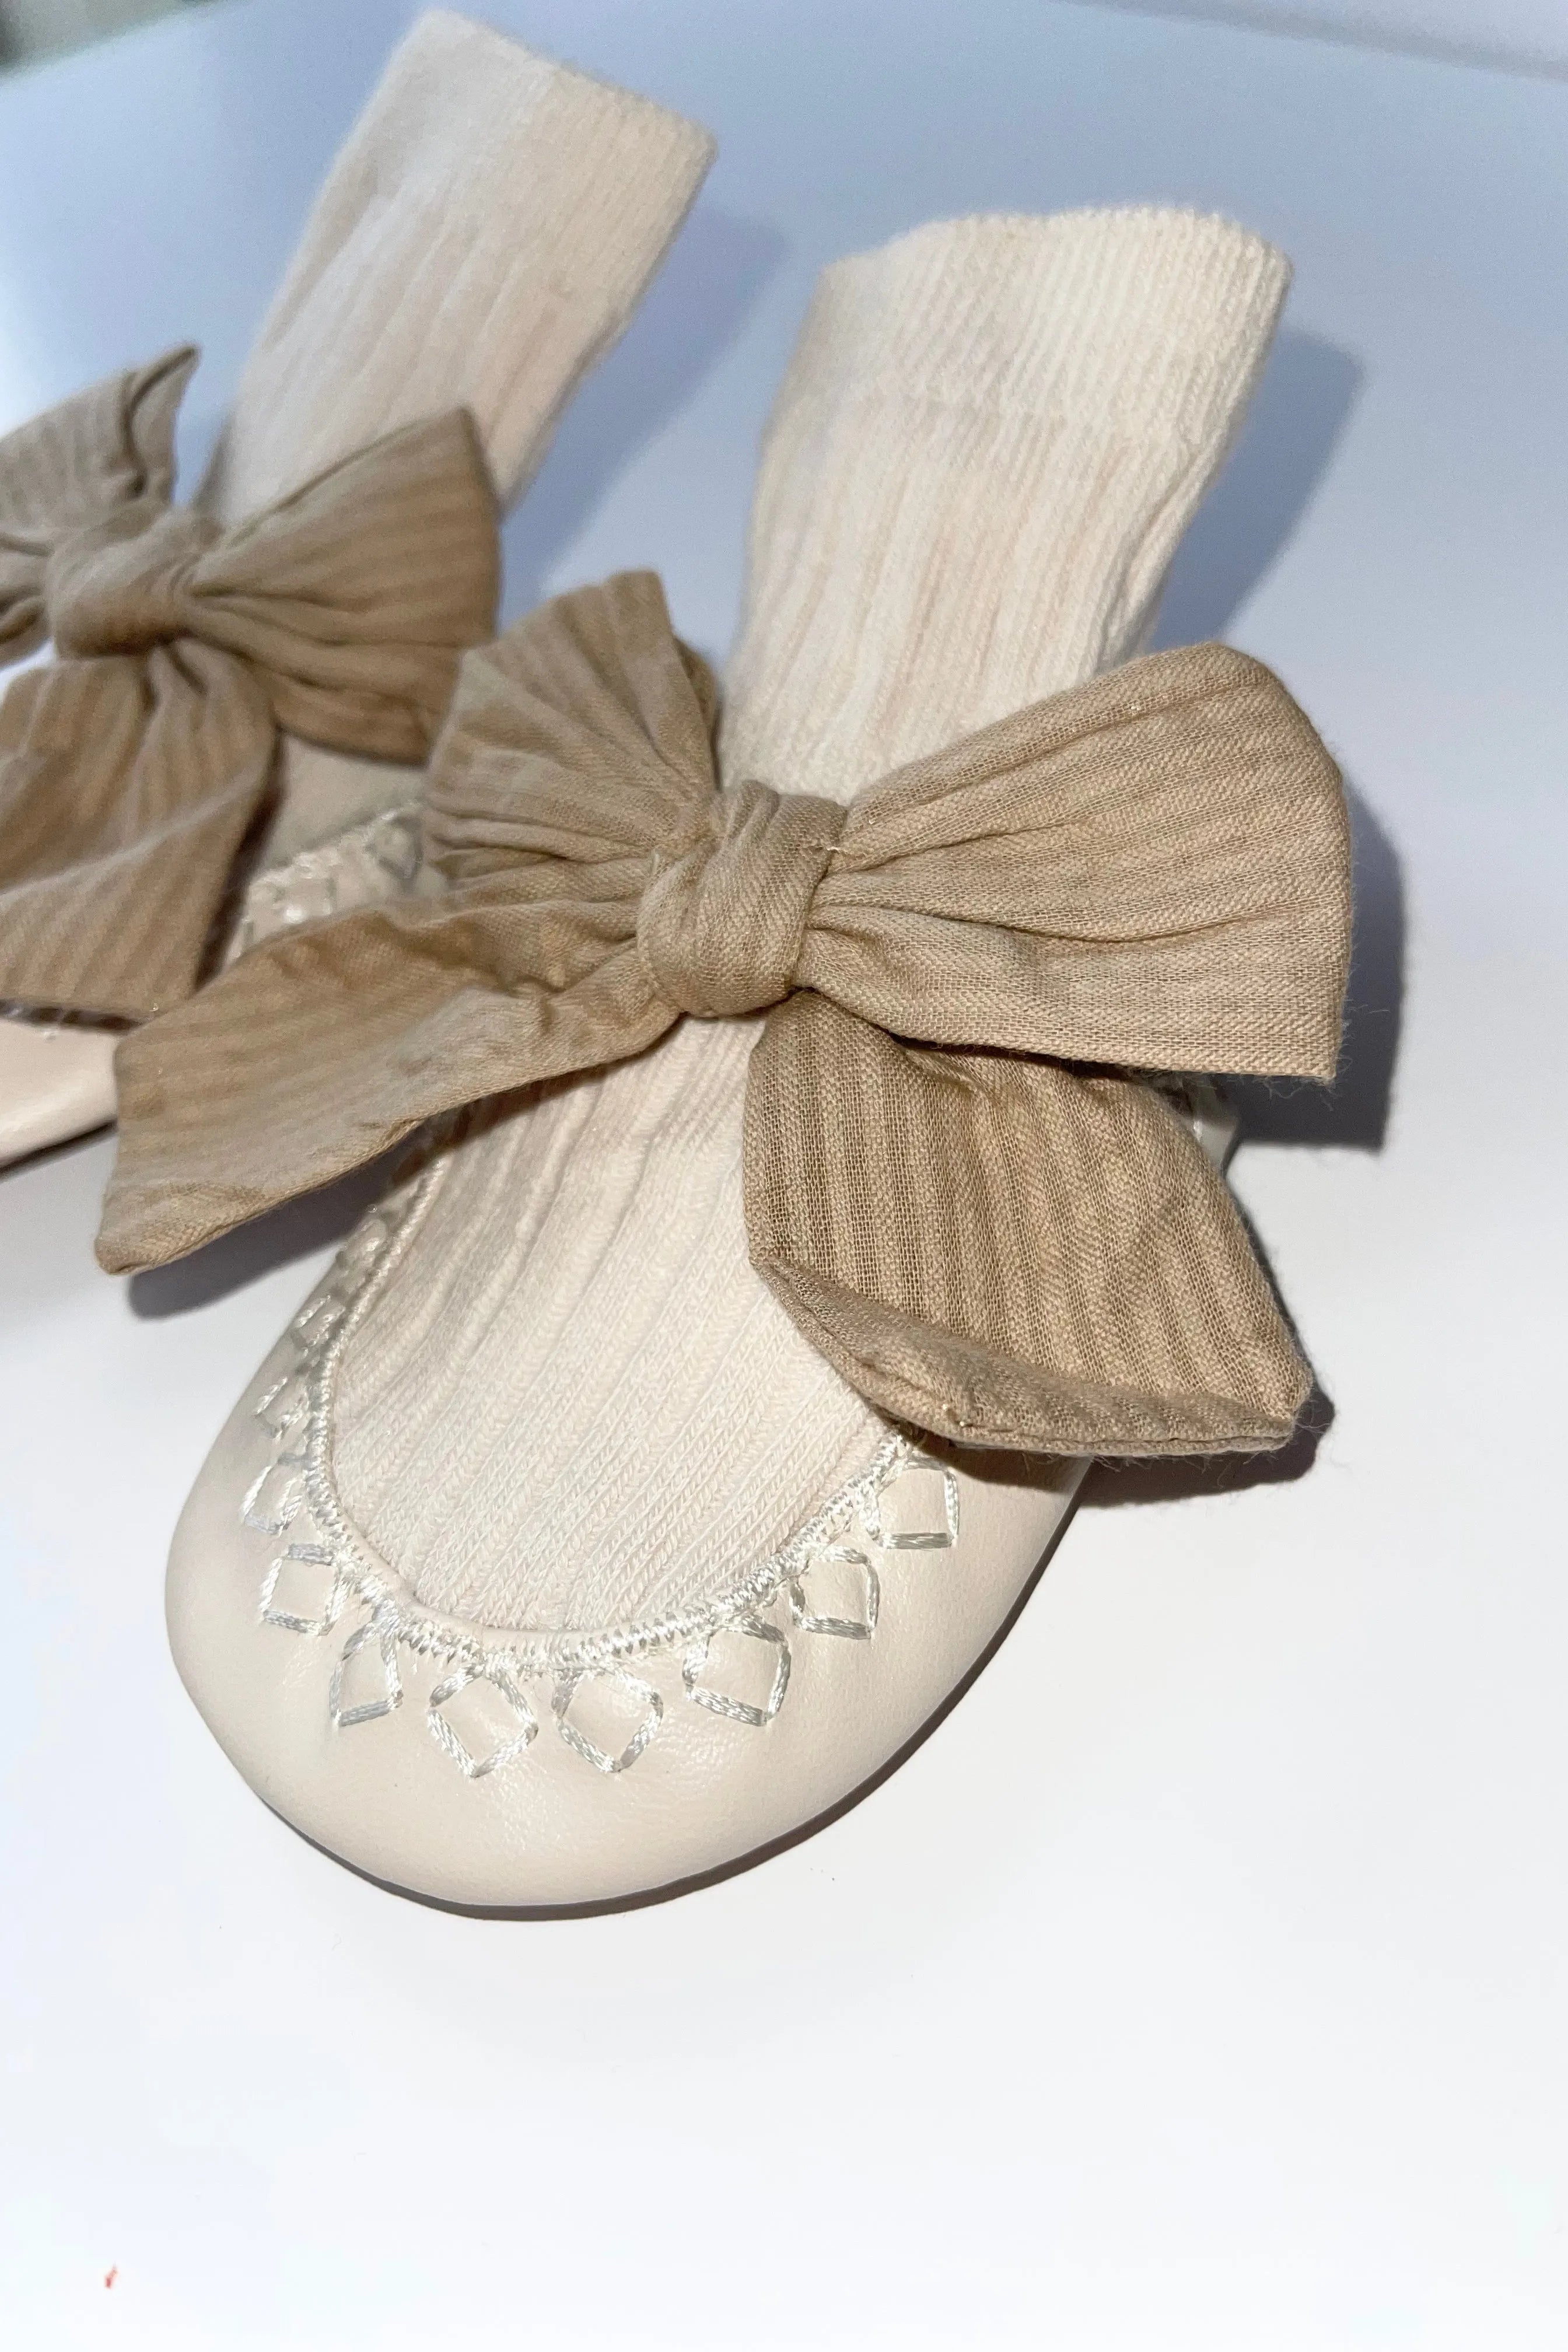 Cream/ Beige Bow Baby Pram Boots - dainty delilah spanish childrens clothing